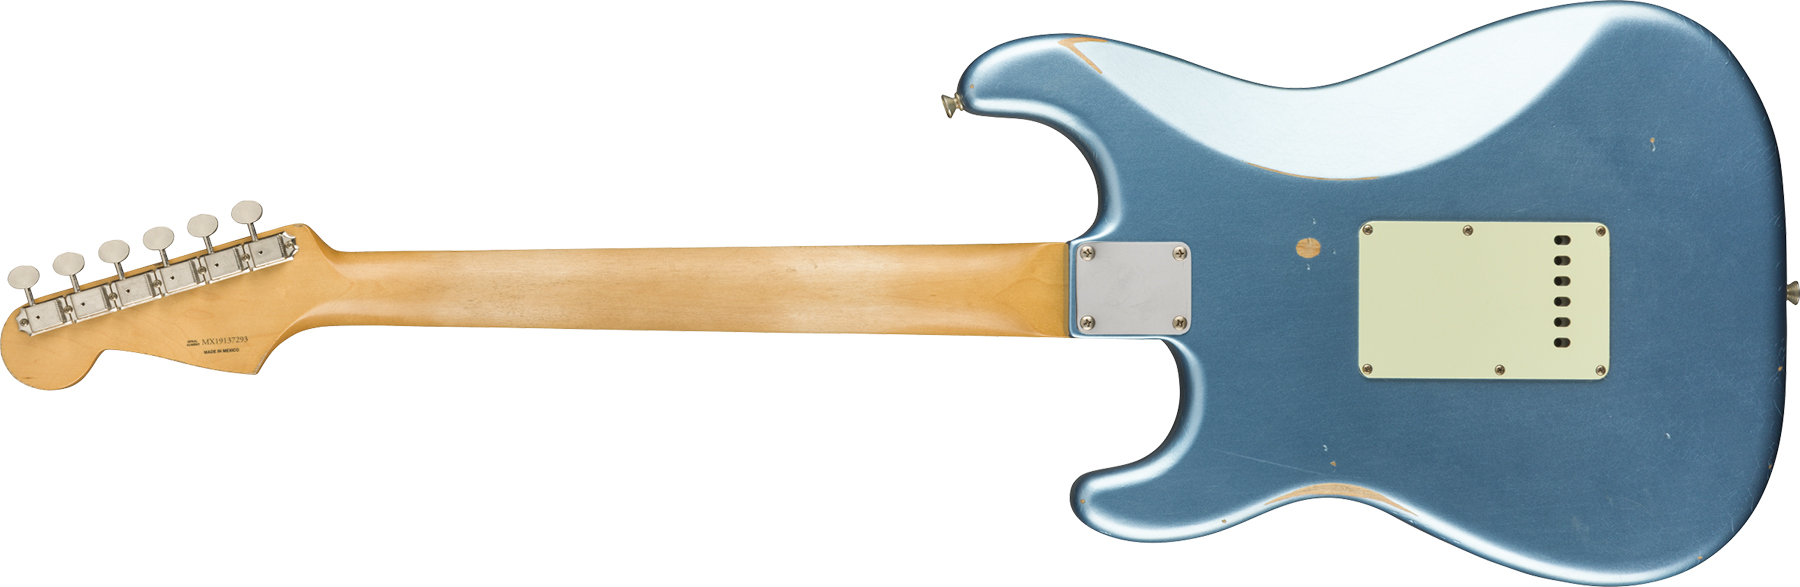 Fender Strat 60s Road Worn Mex Pf - Lake Placid Blue - Str shape electric guitar - Variation 1